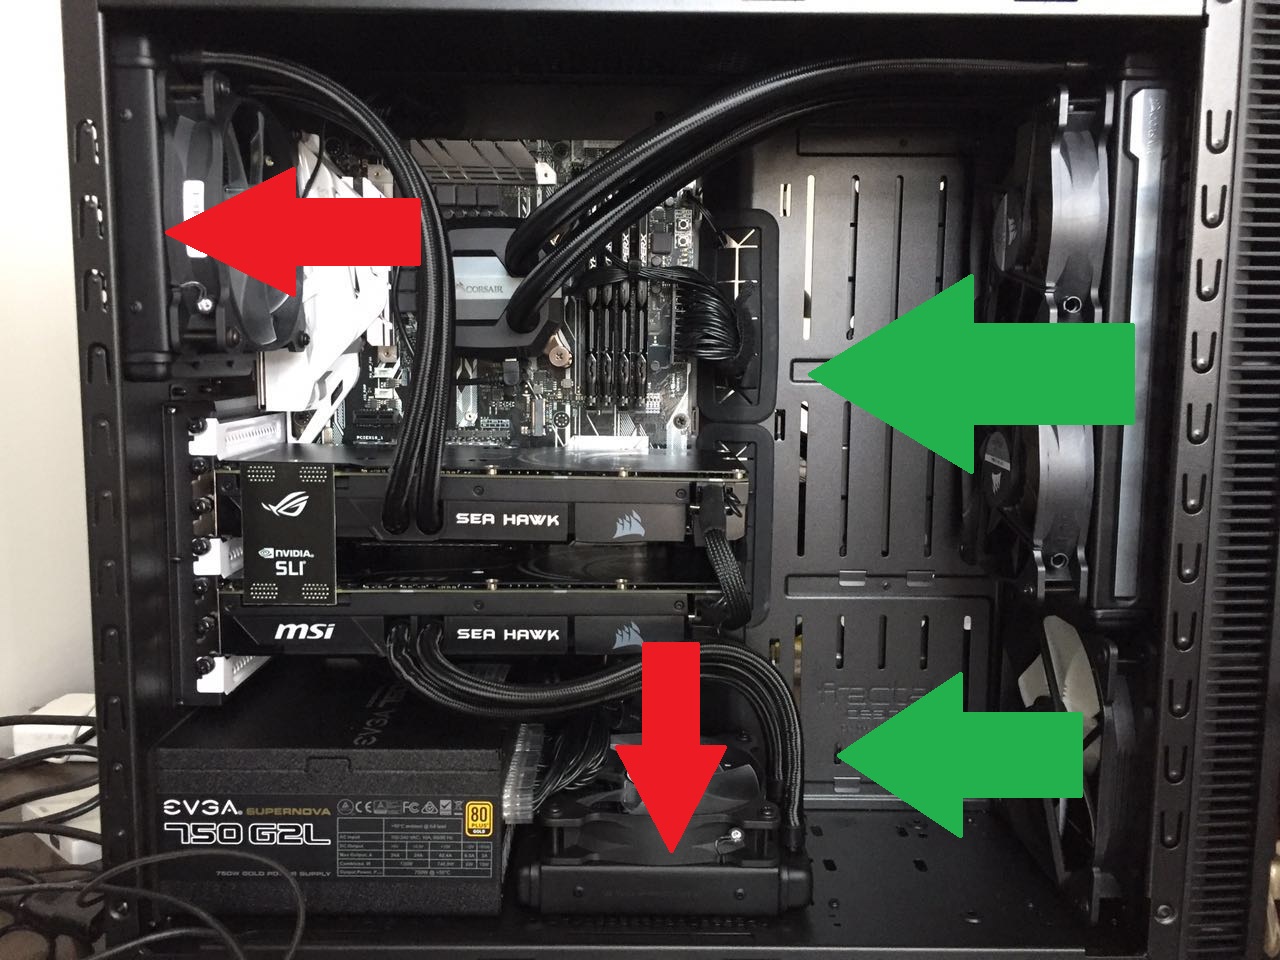 Airflow in PC case